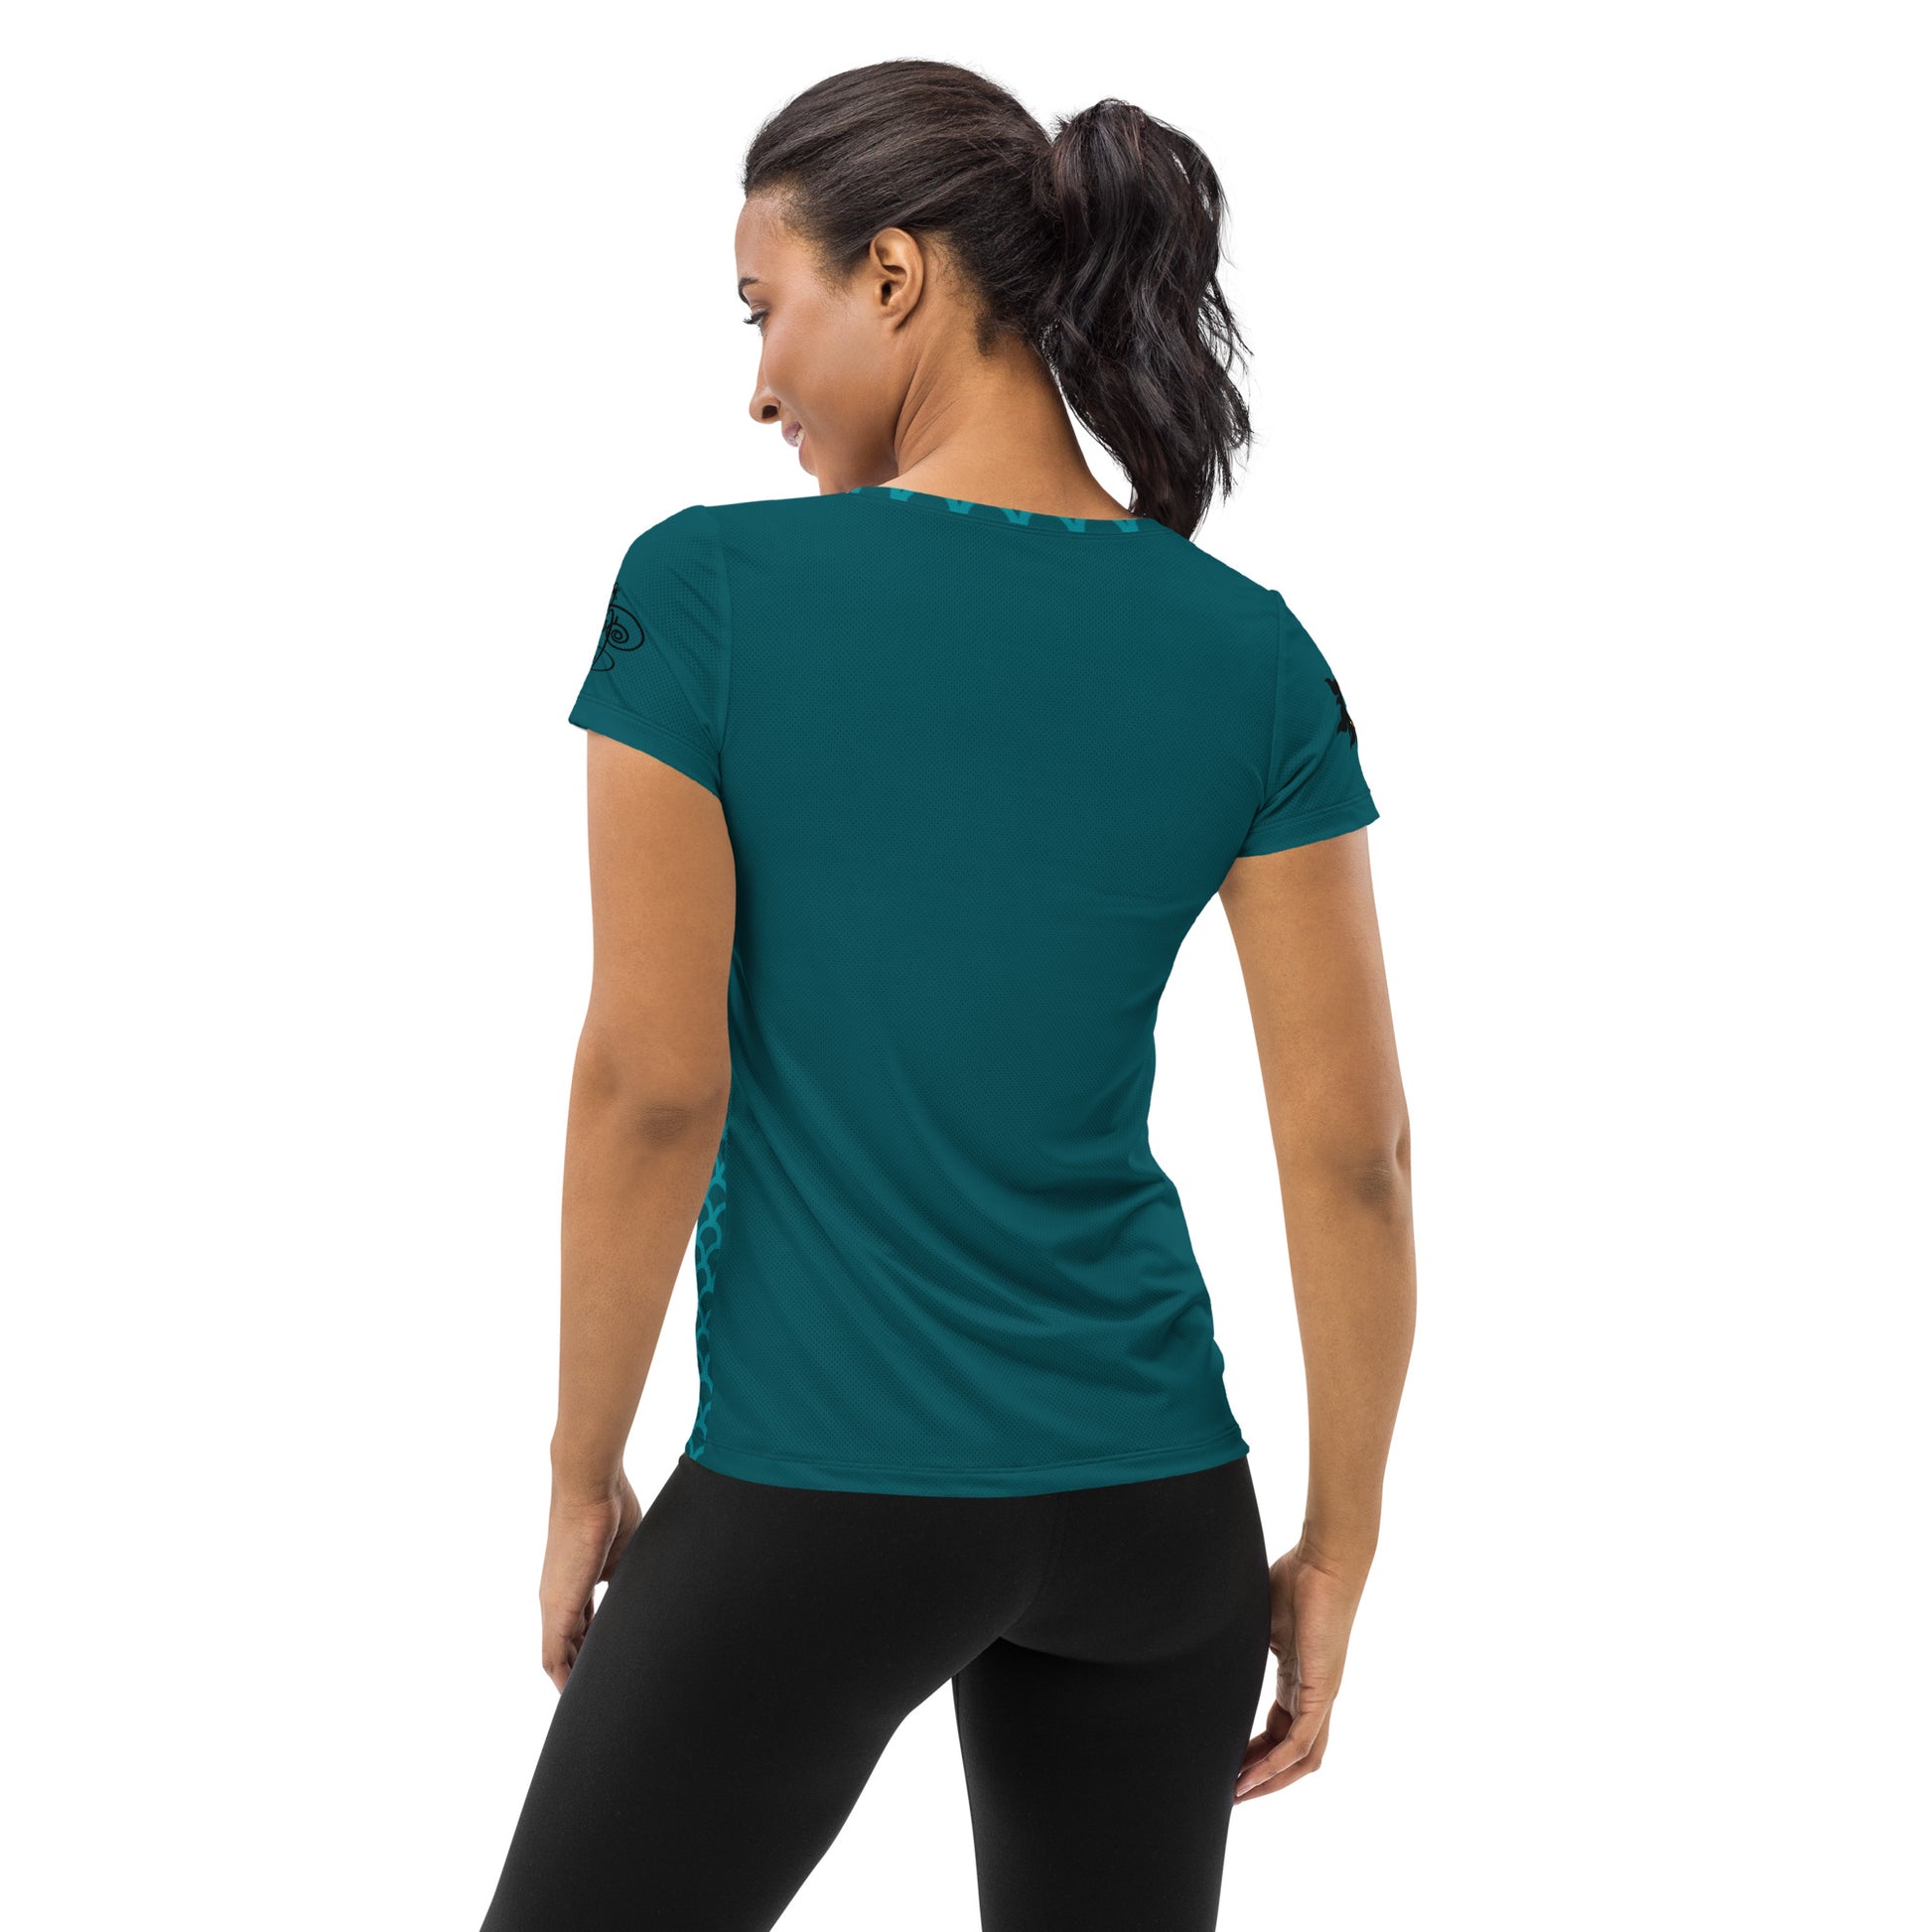 ActSun 2 Women's Athletic T-shirt / Sport Shirts / Fitness Woman.